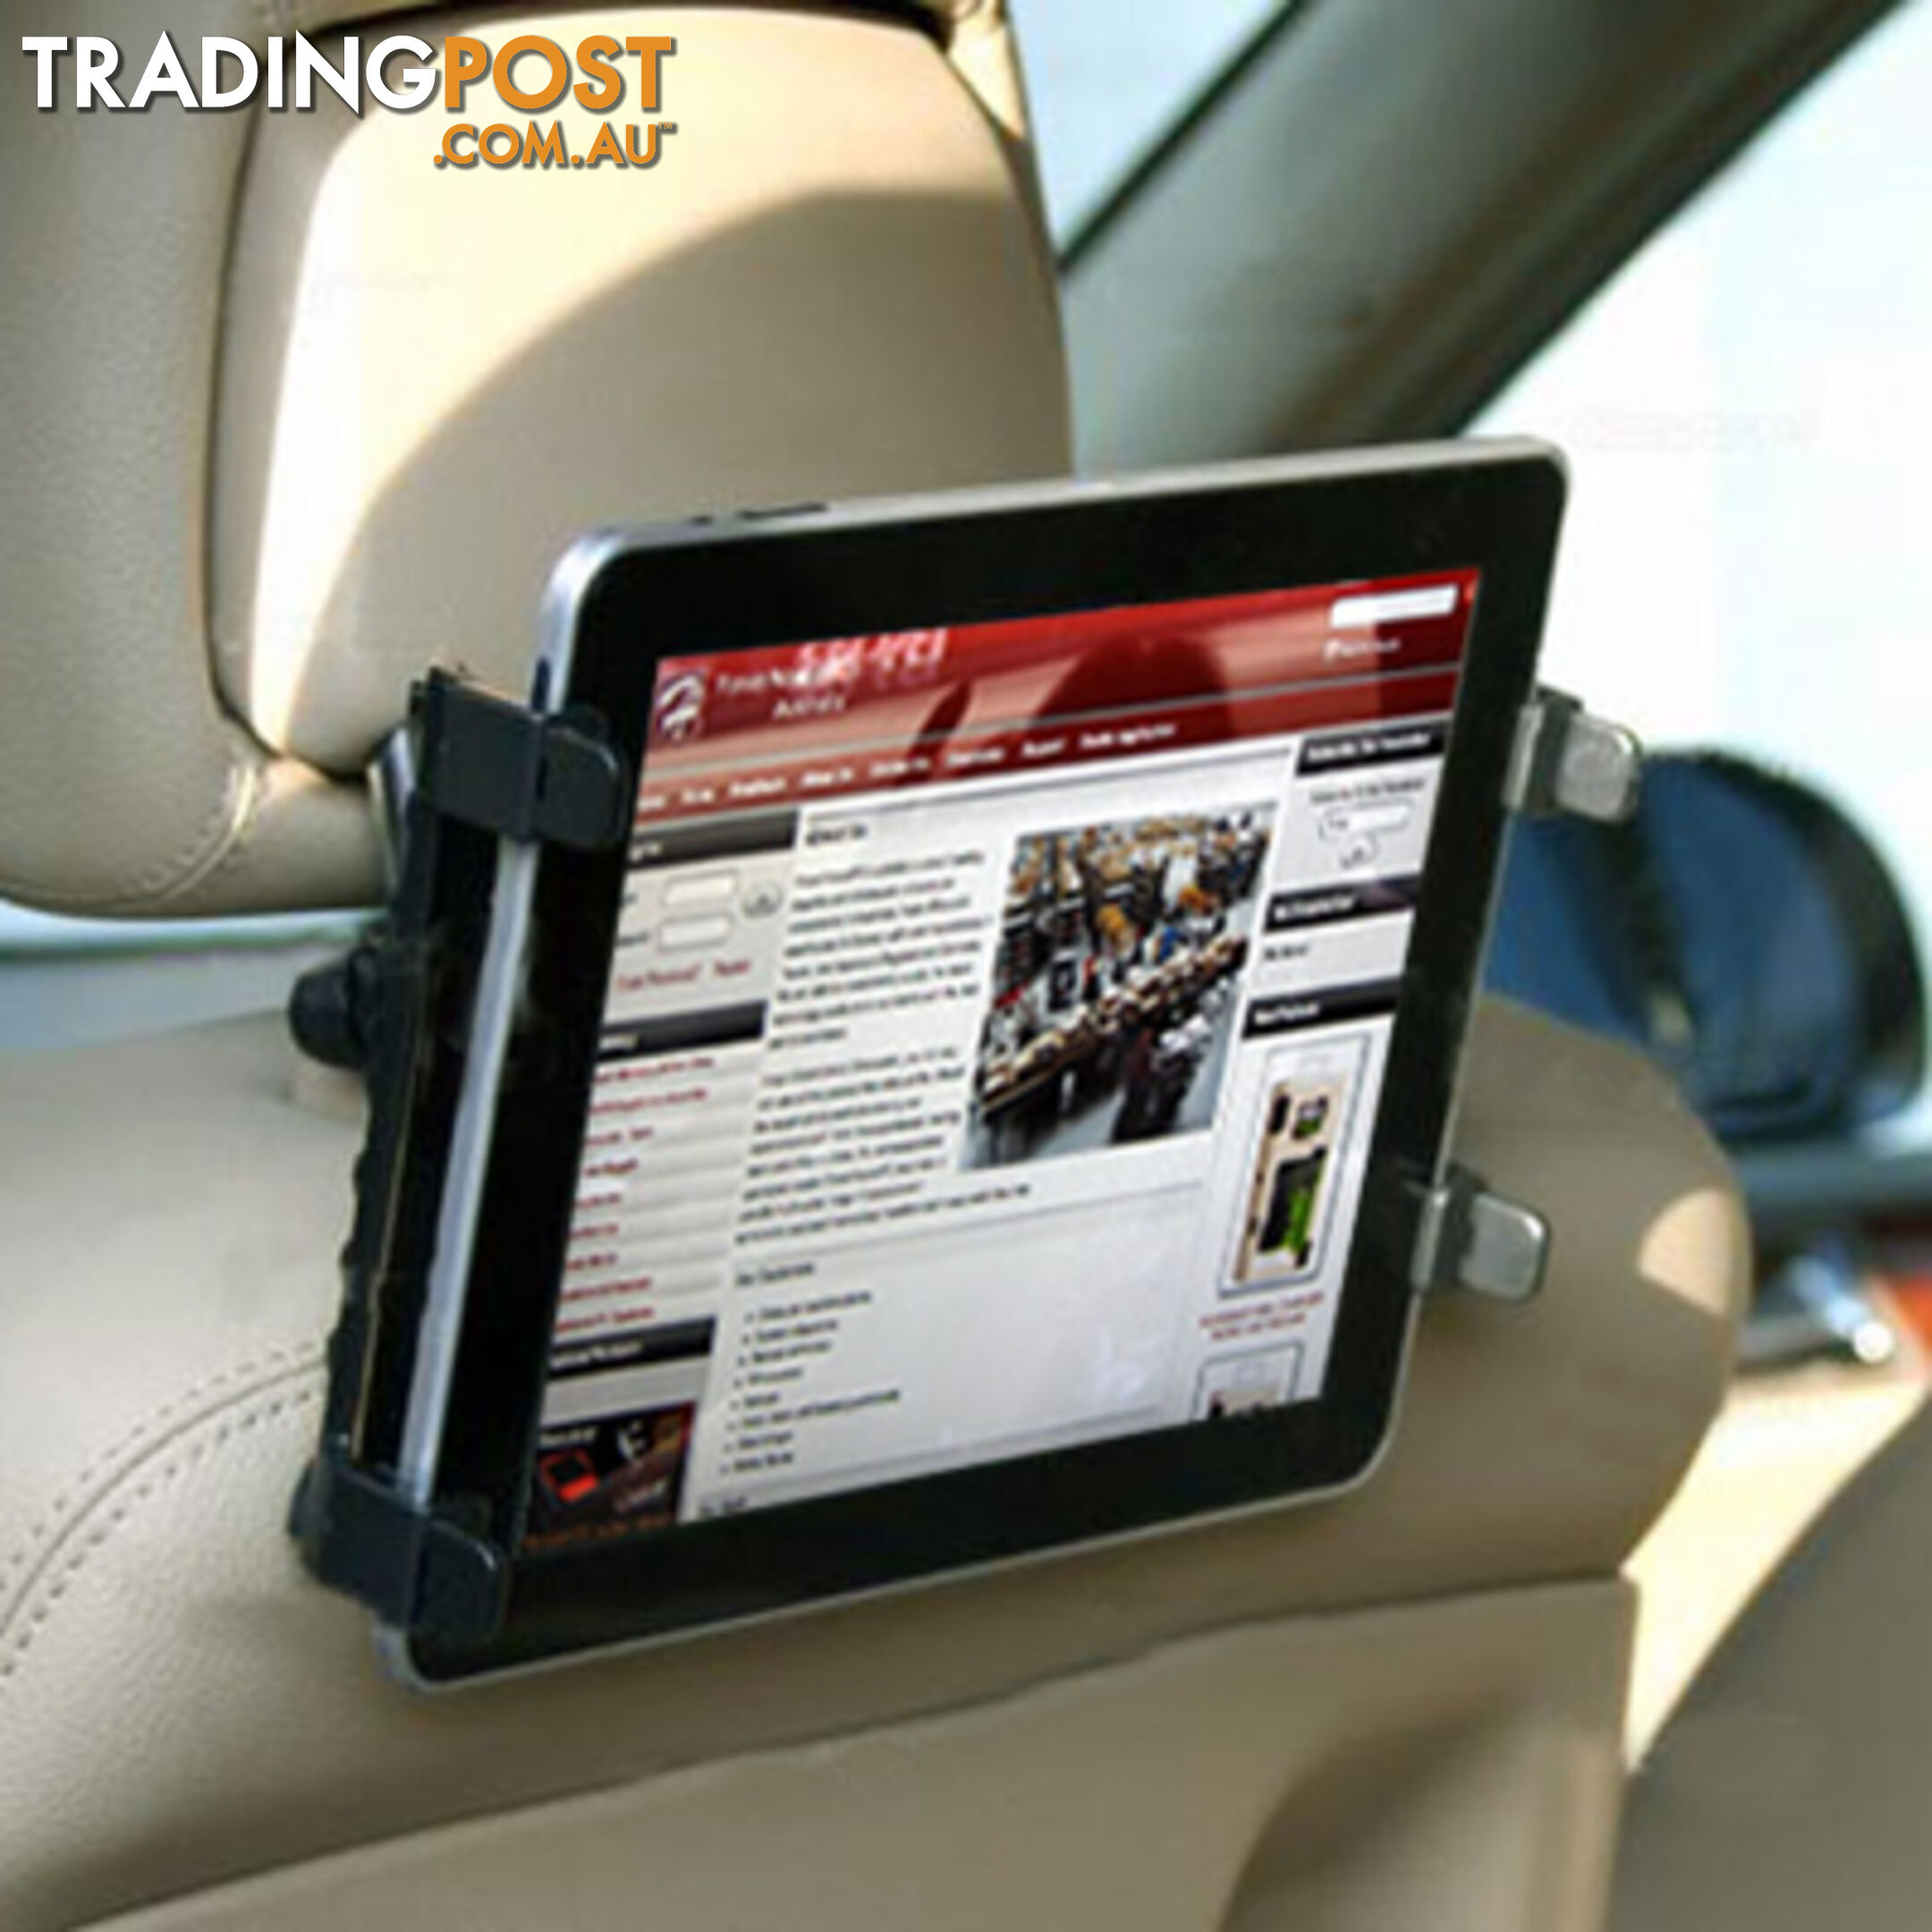 Car Back Seat Bracket Mount Holder for iPad, GPS, DVD,TV